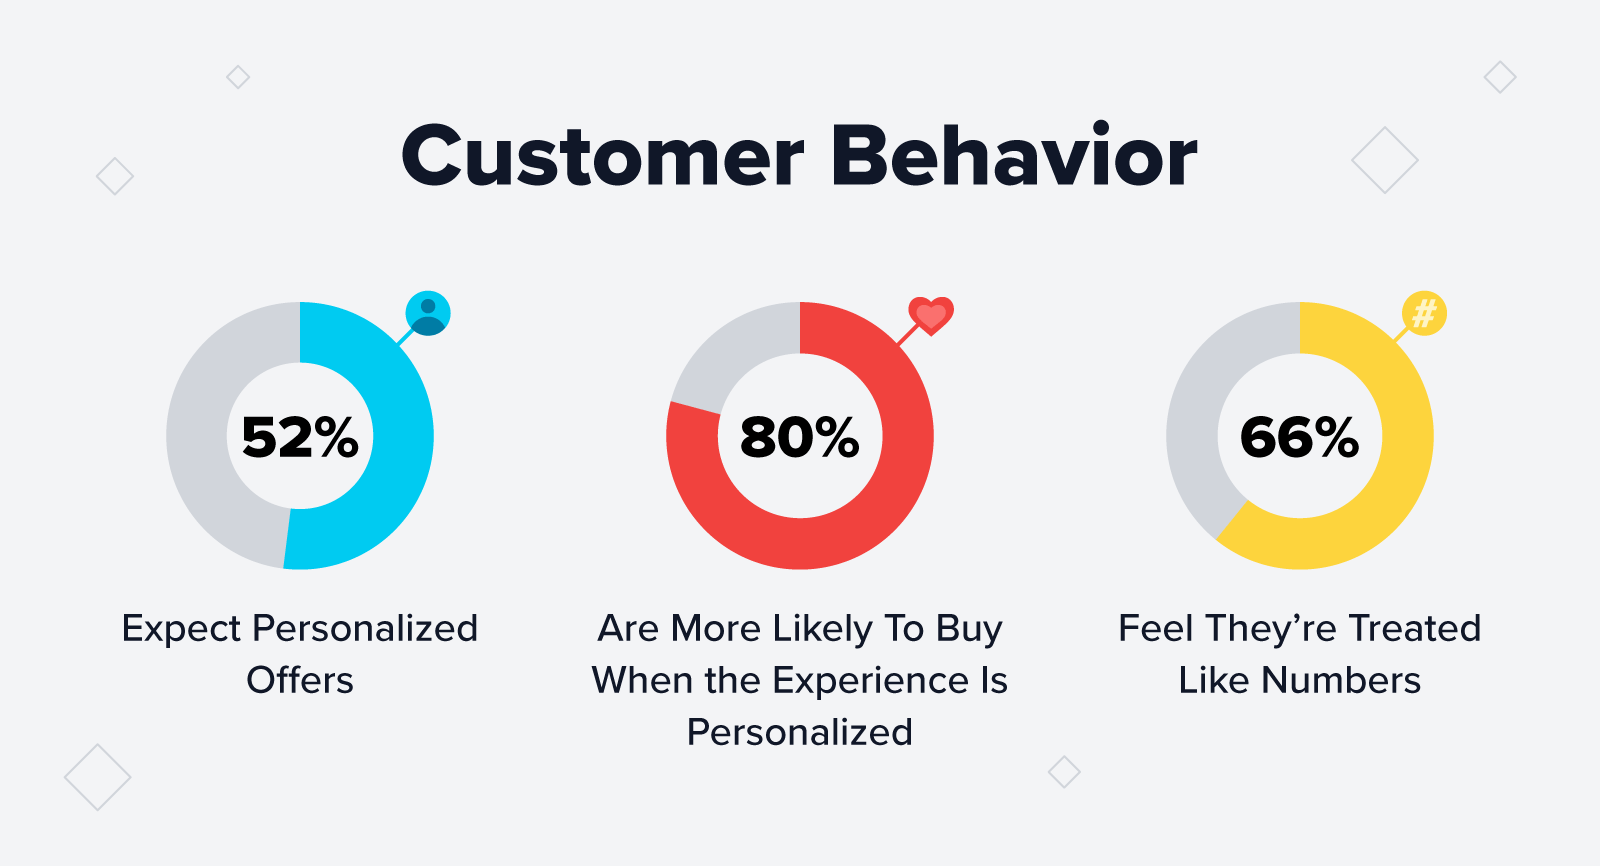 ecommerce personalization - customer behavior statistics infographic